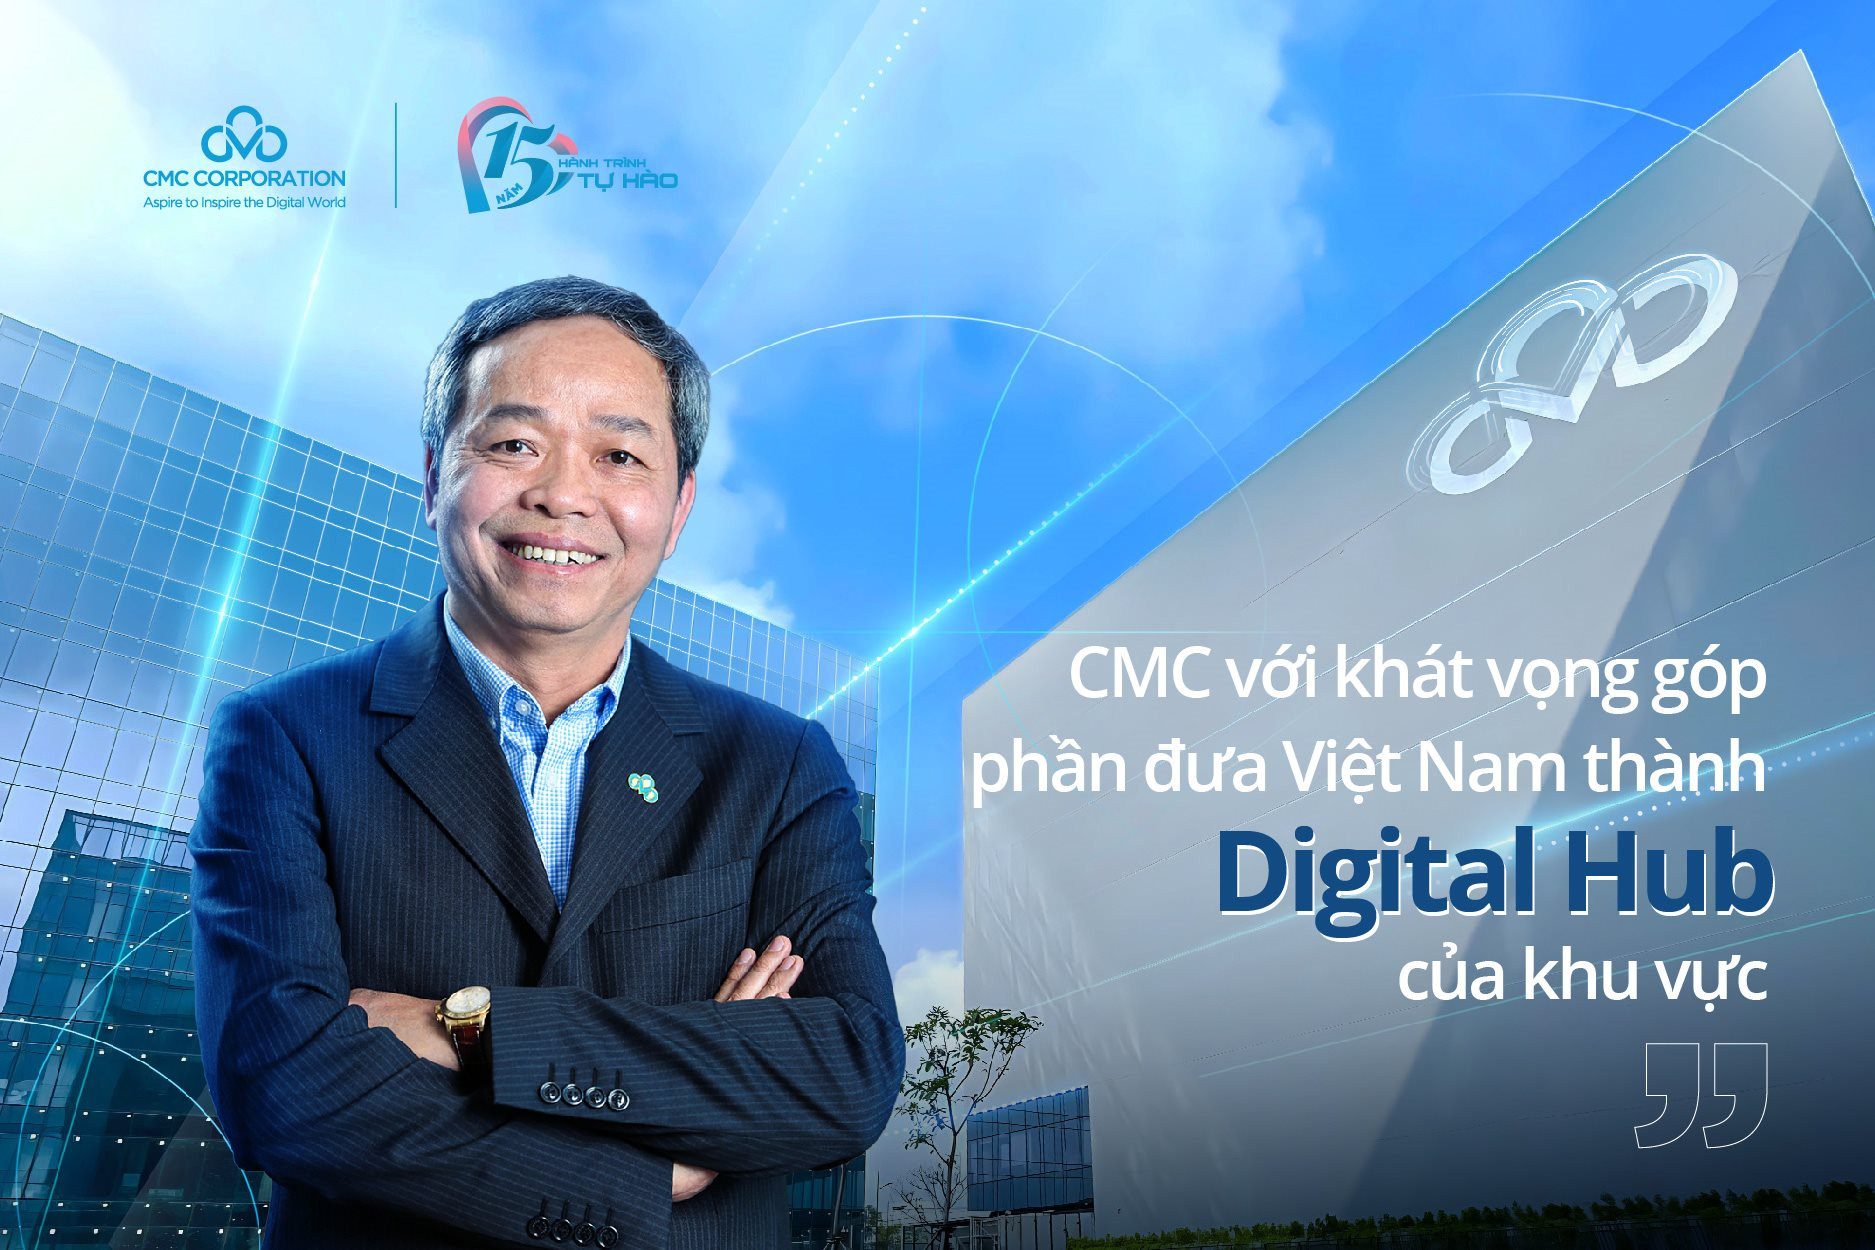 Aspiration to turn Vietnam into a Digital Hub of the region